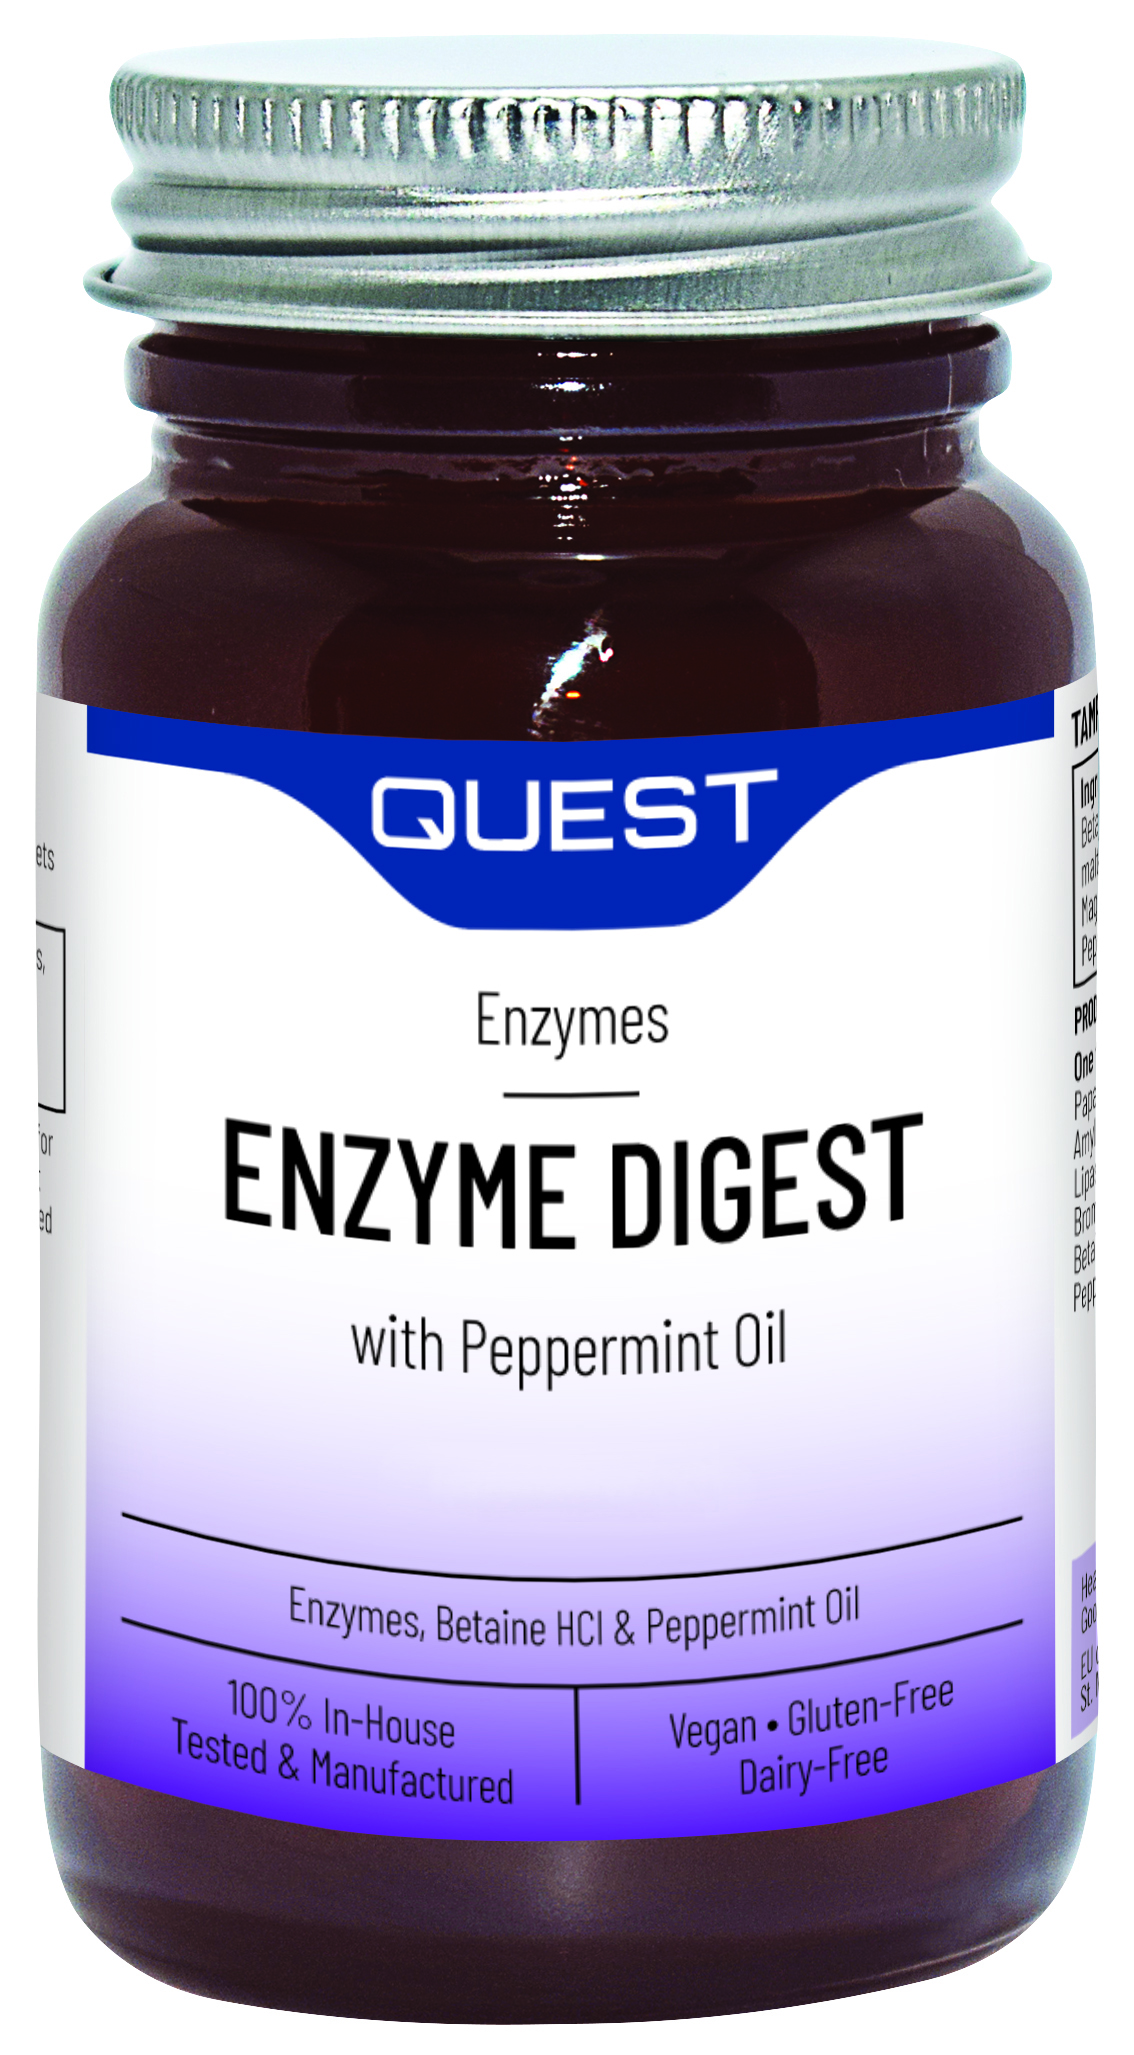 Enzyme Digest